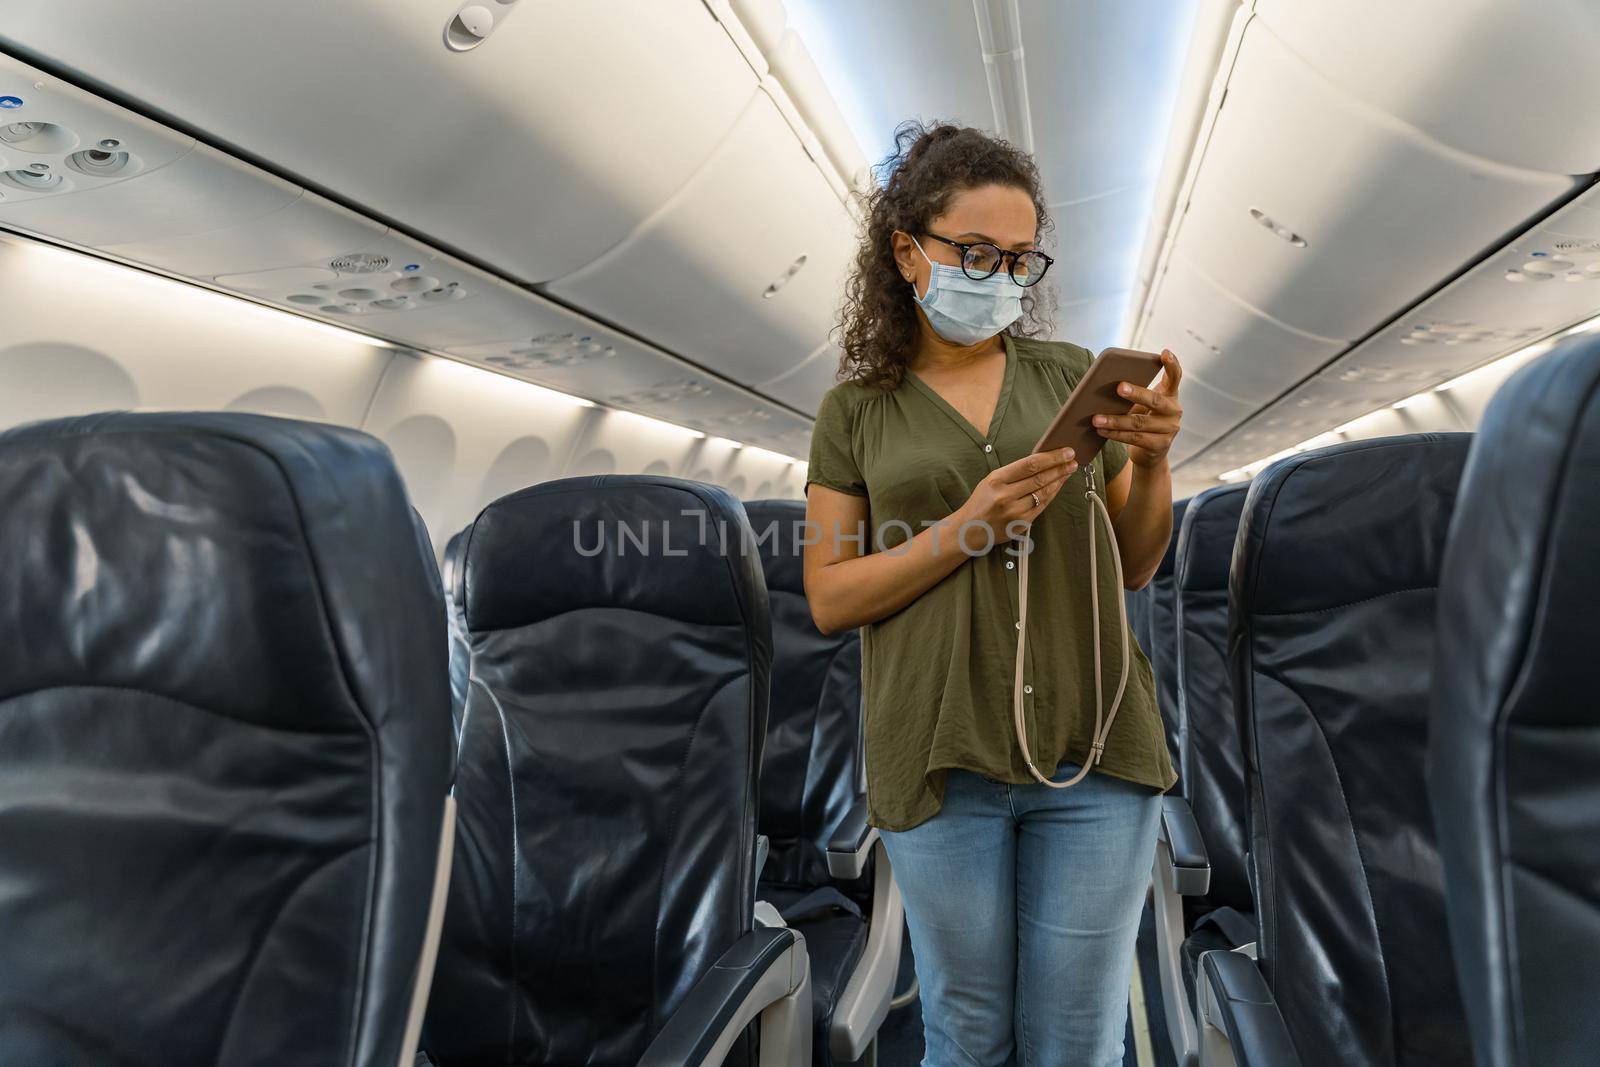 Adult woman looking at phone screen on airplane by Yaroslav_astakhov